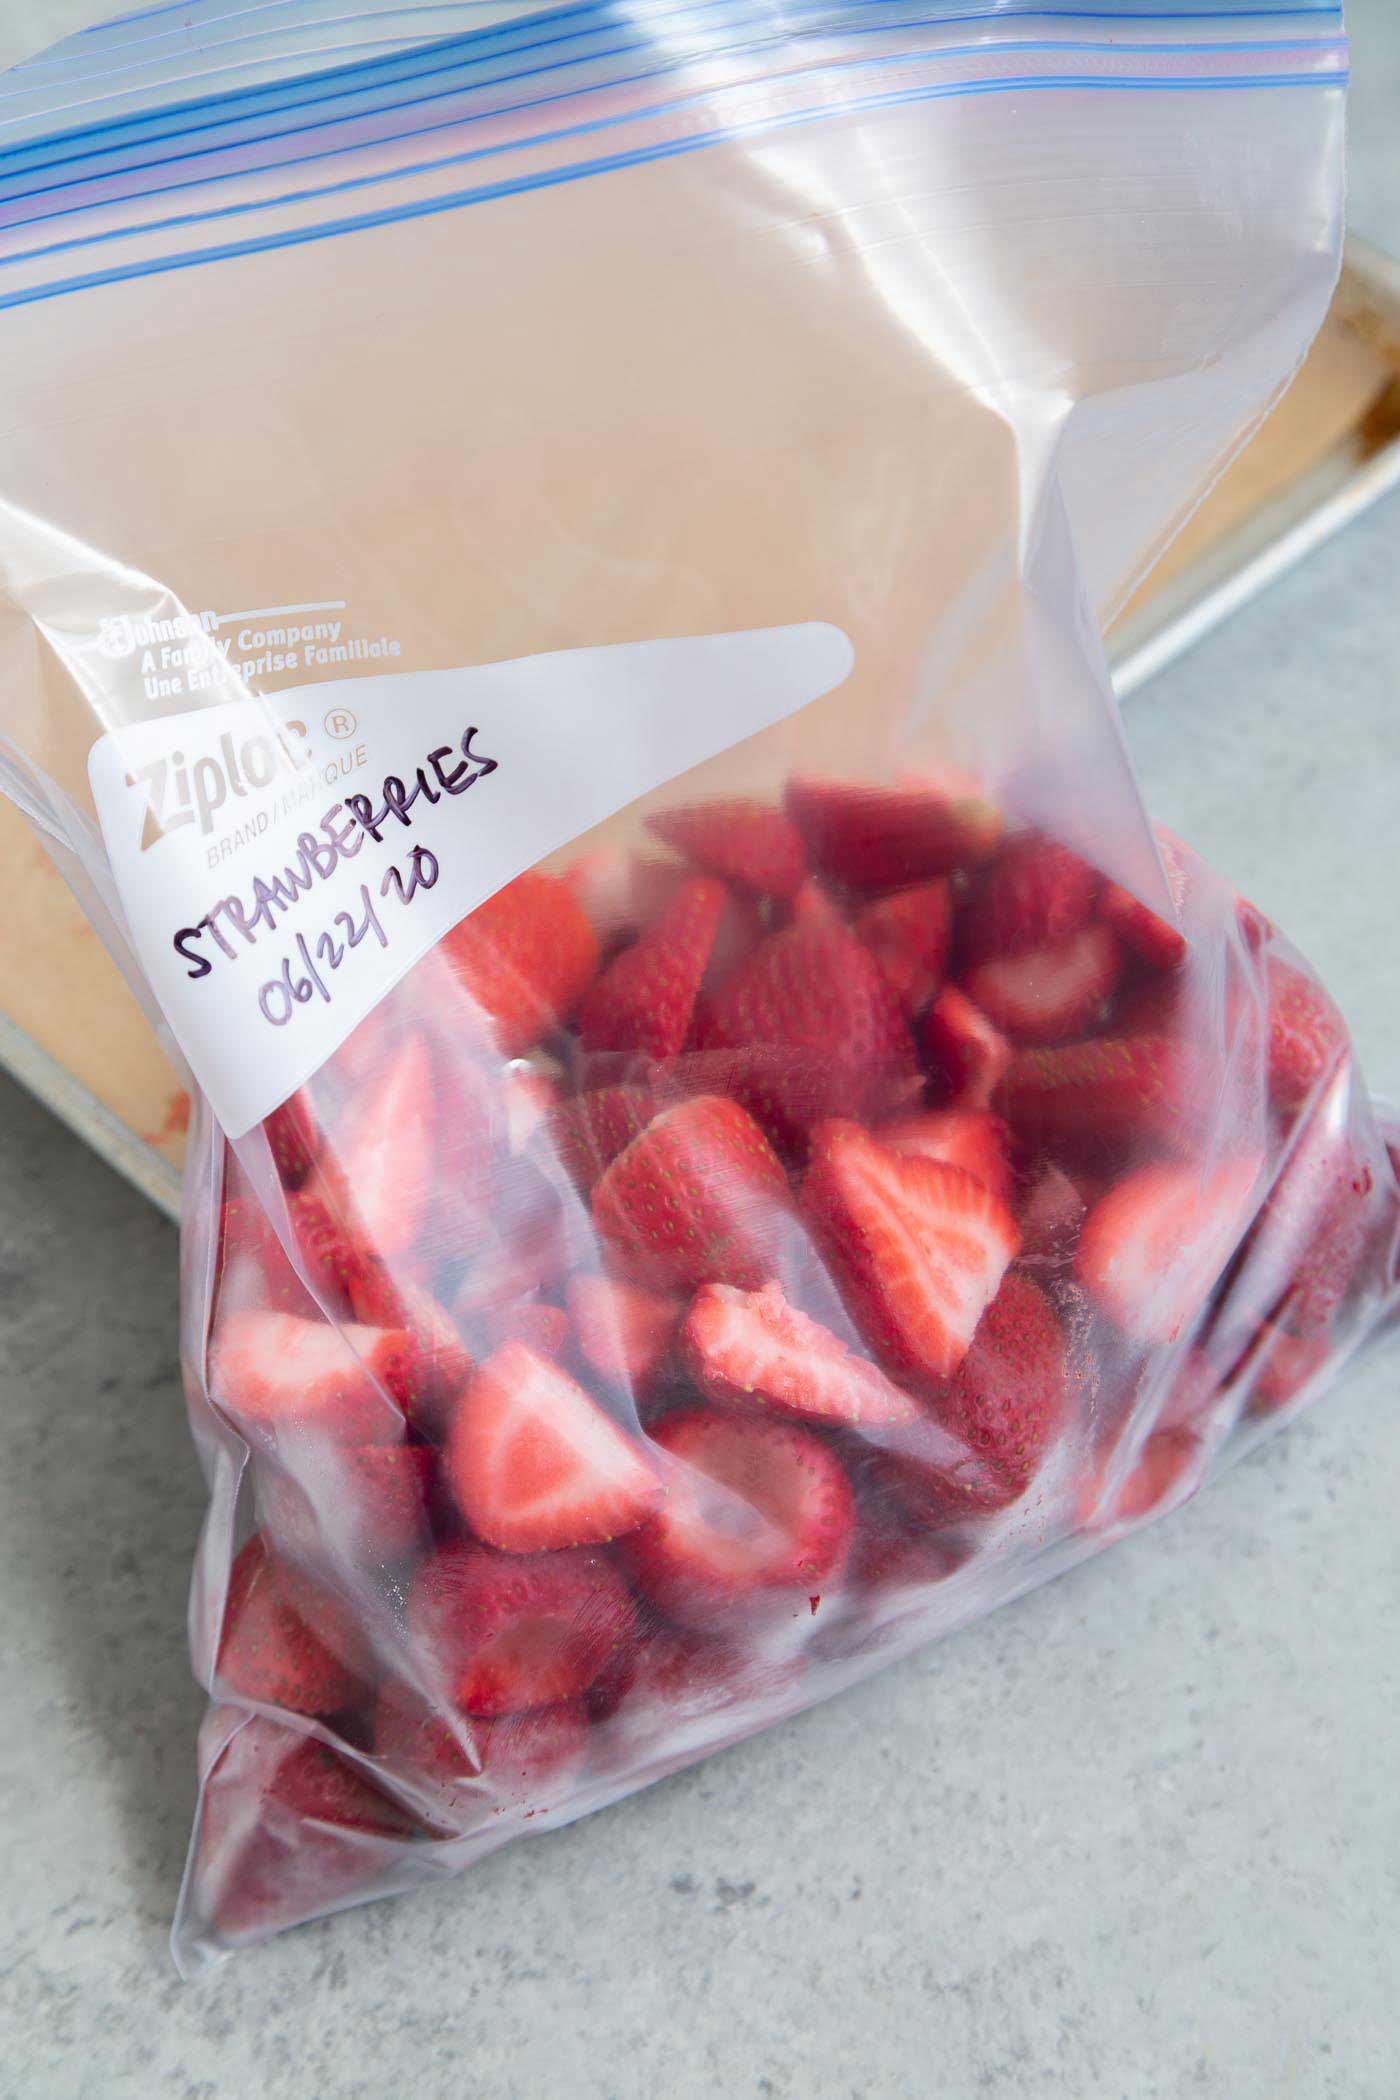 How to Freeze Fresh Strawberries